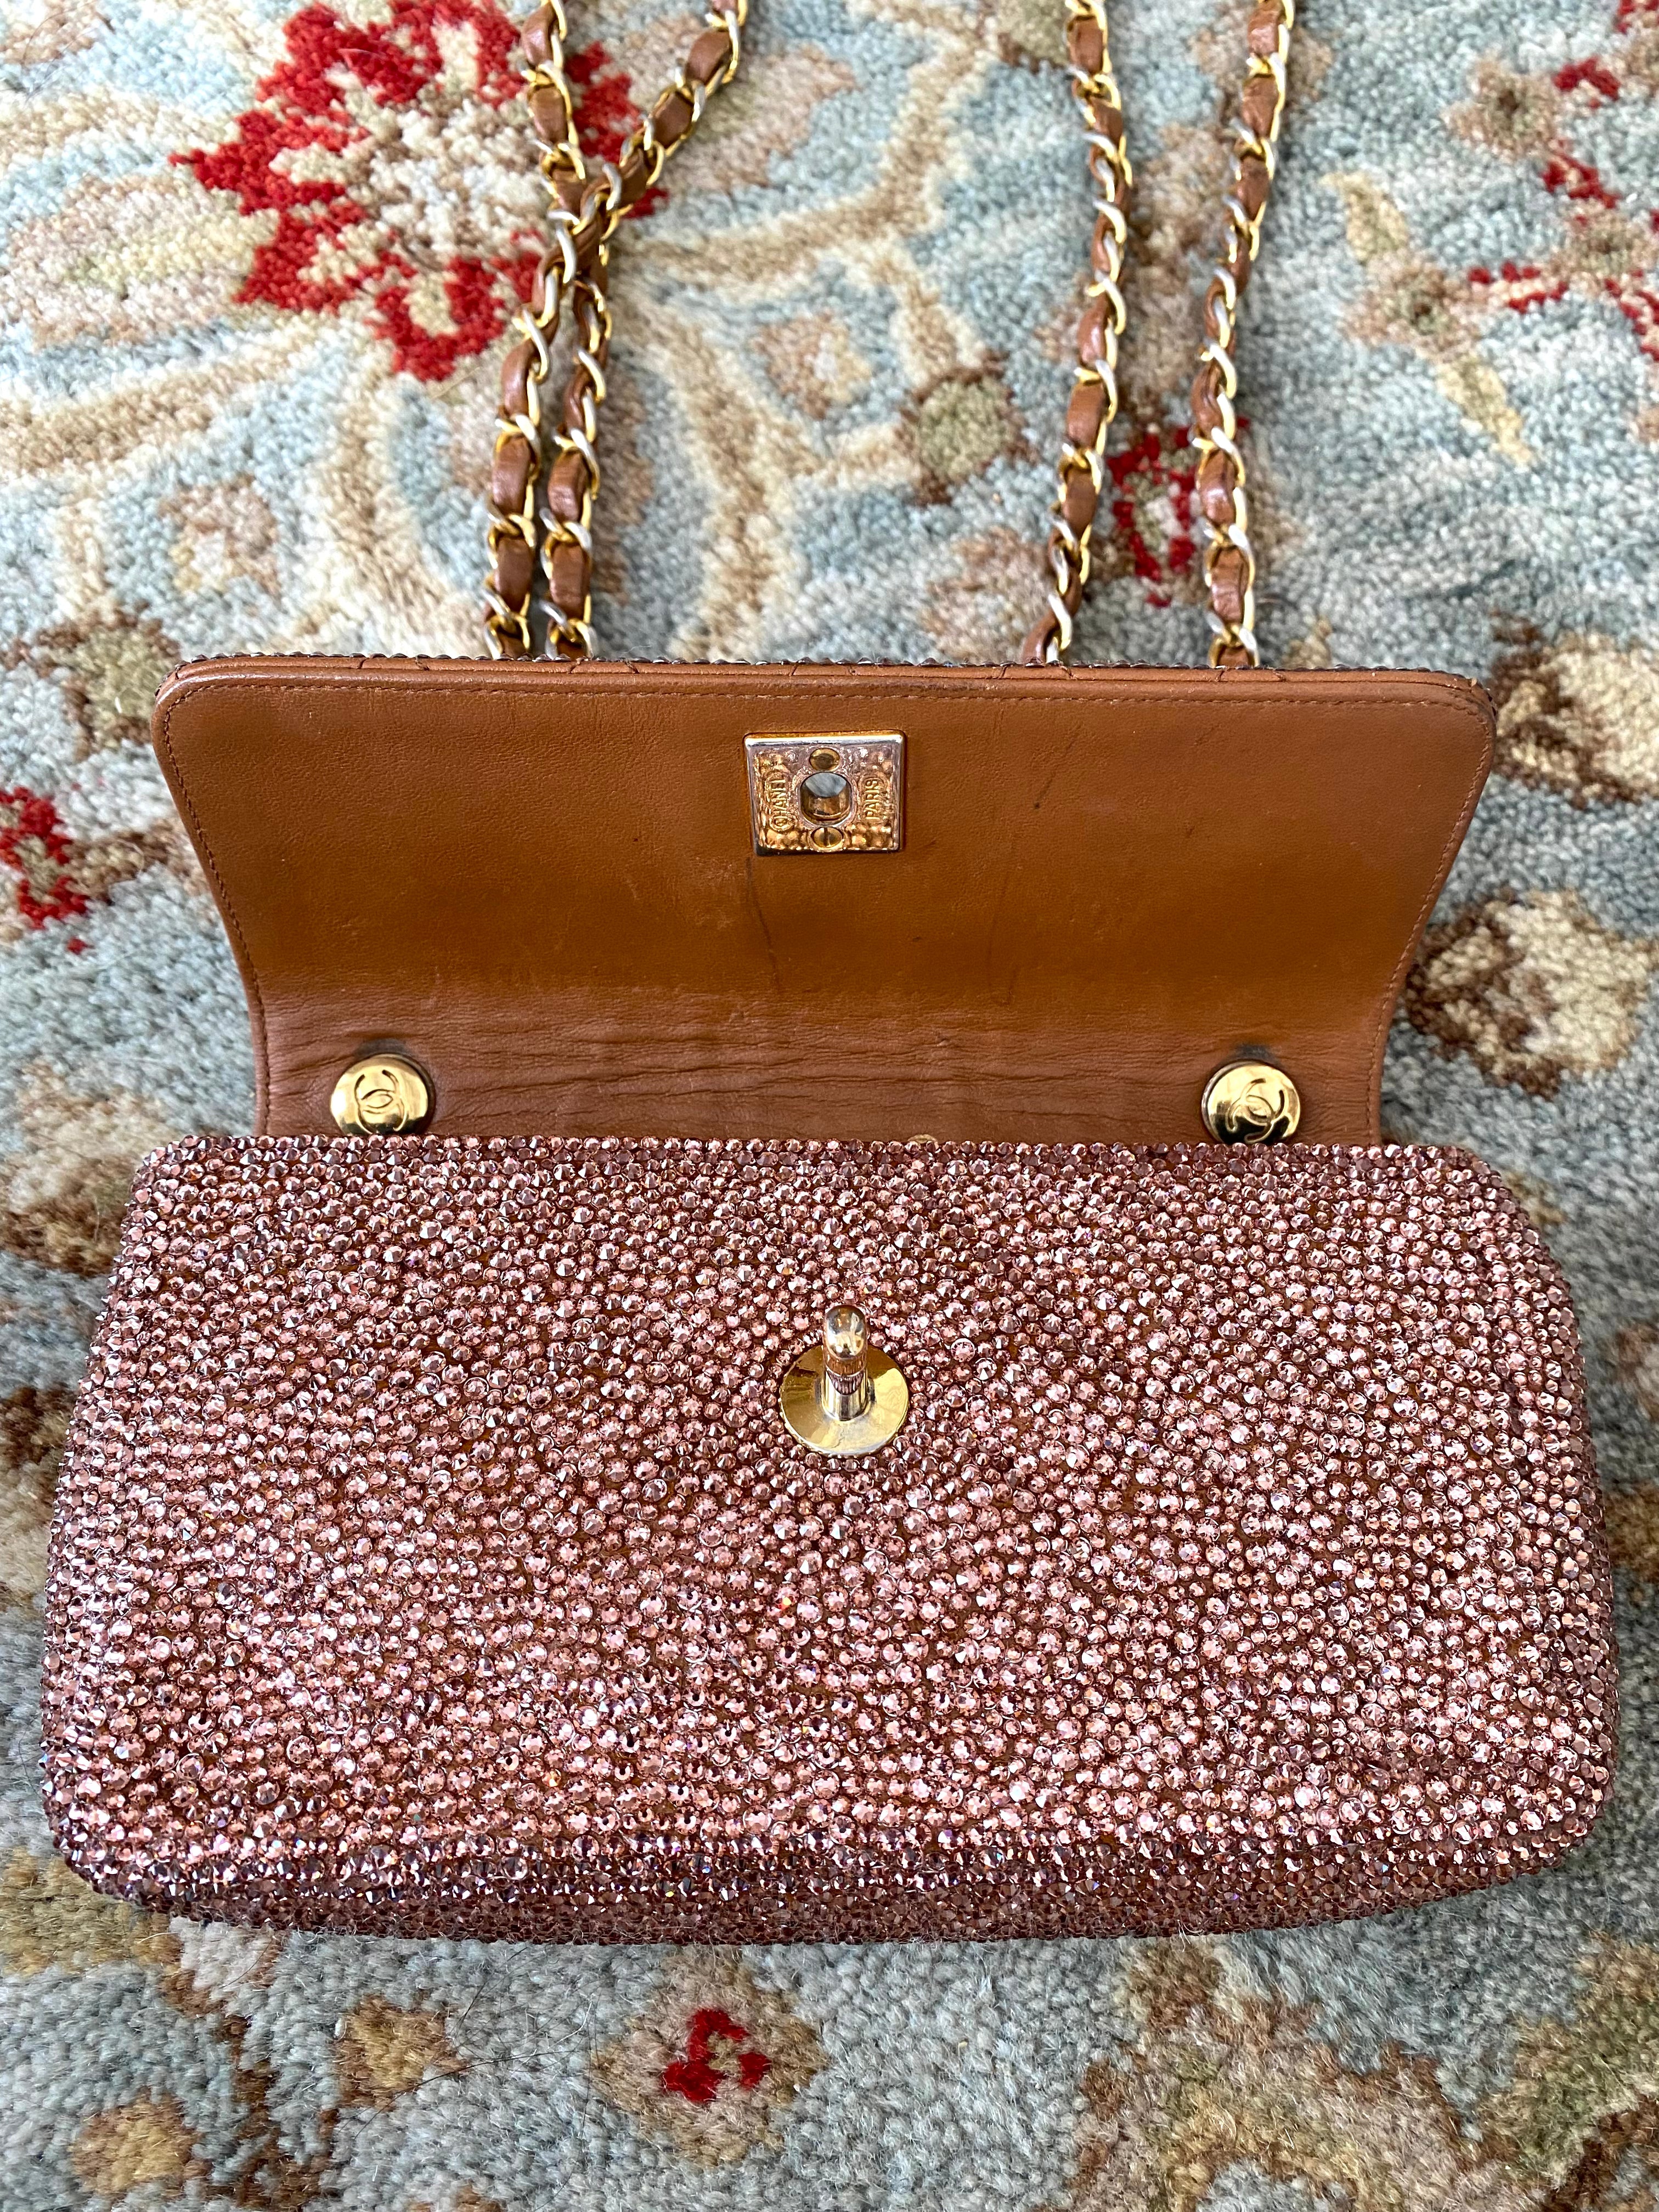 Chanel Vintage 90’s Mini Flap Bag with Swarovski Crystals